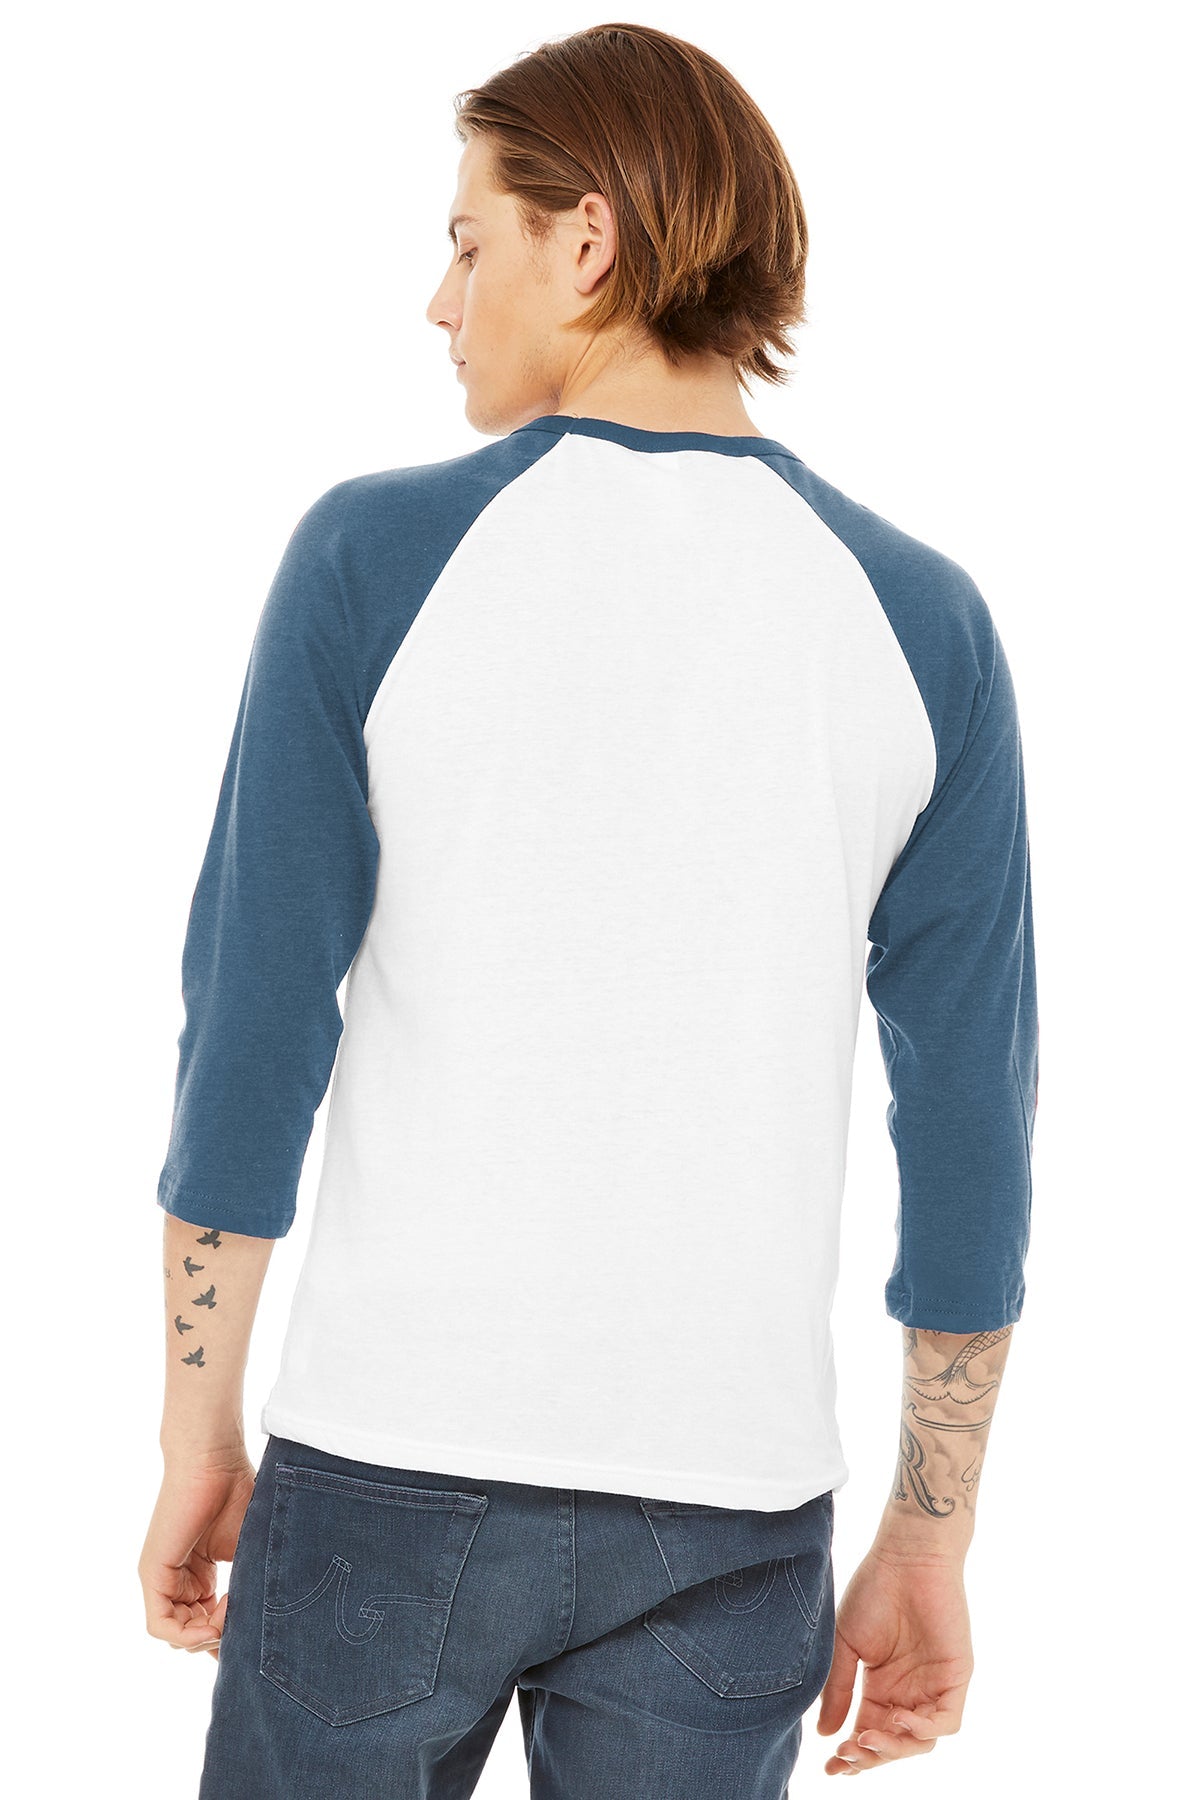 bella + canvas unisex 3/4-sleeve baseball t-shirt 3200 white/ denim